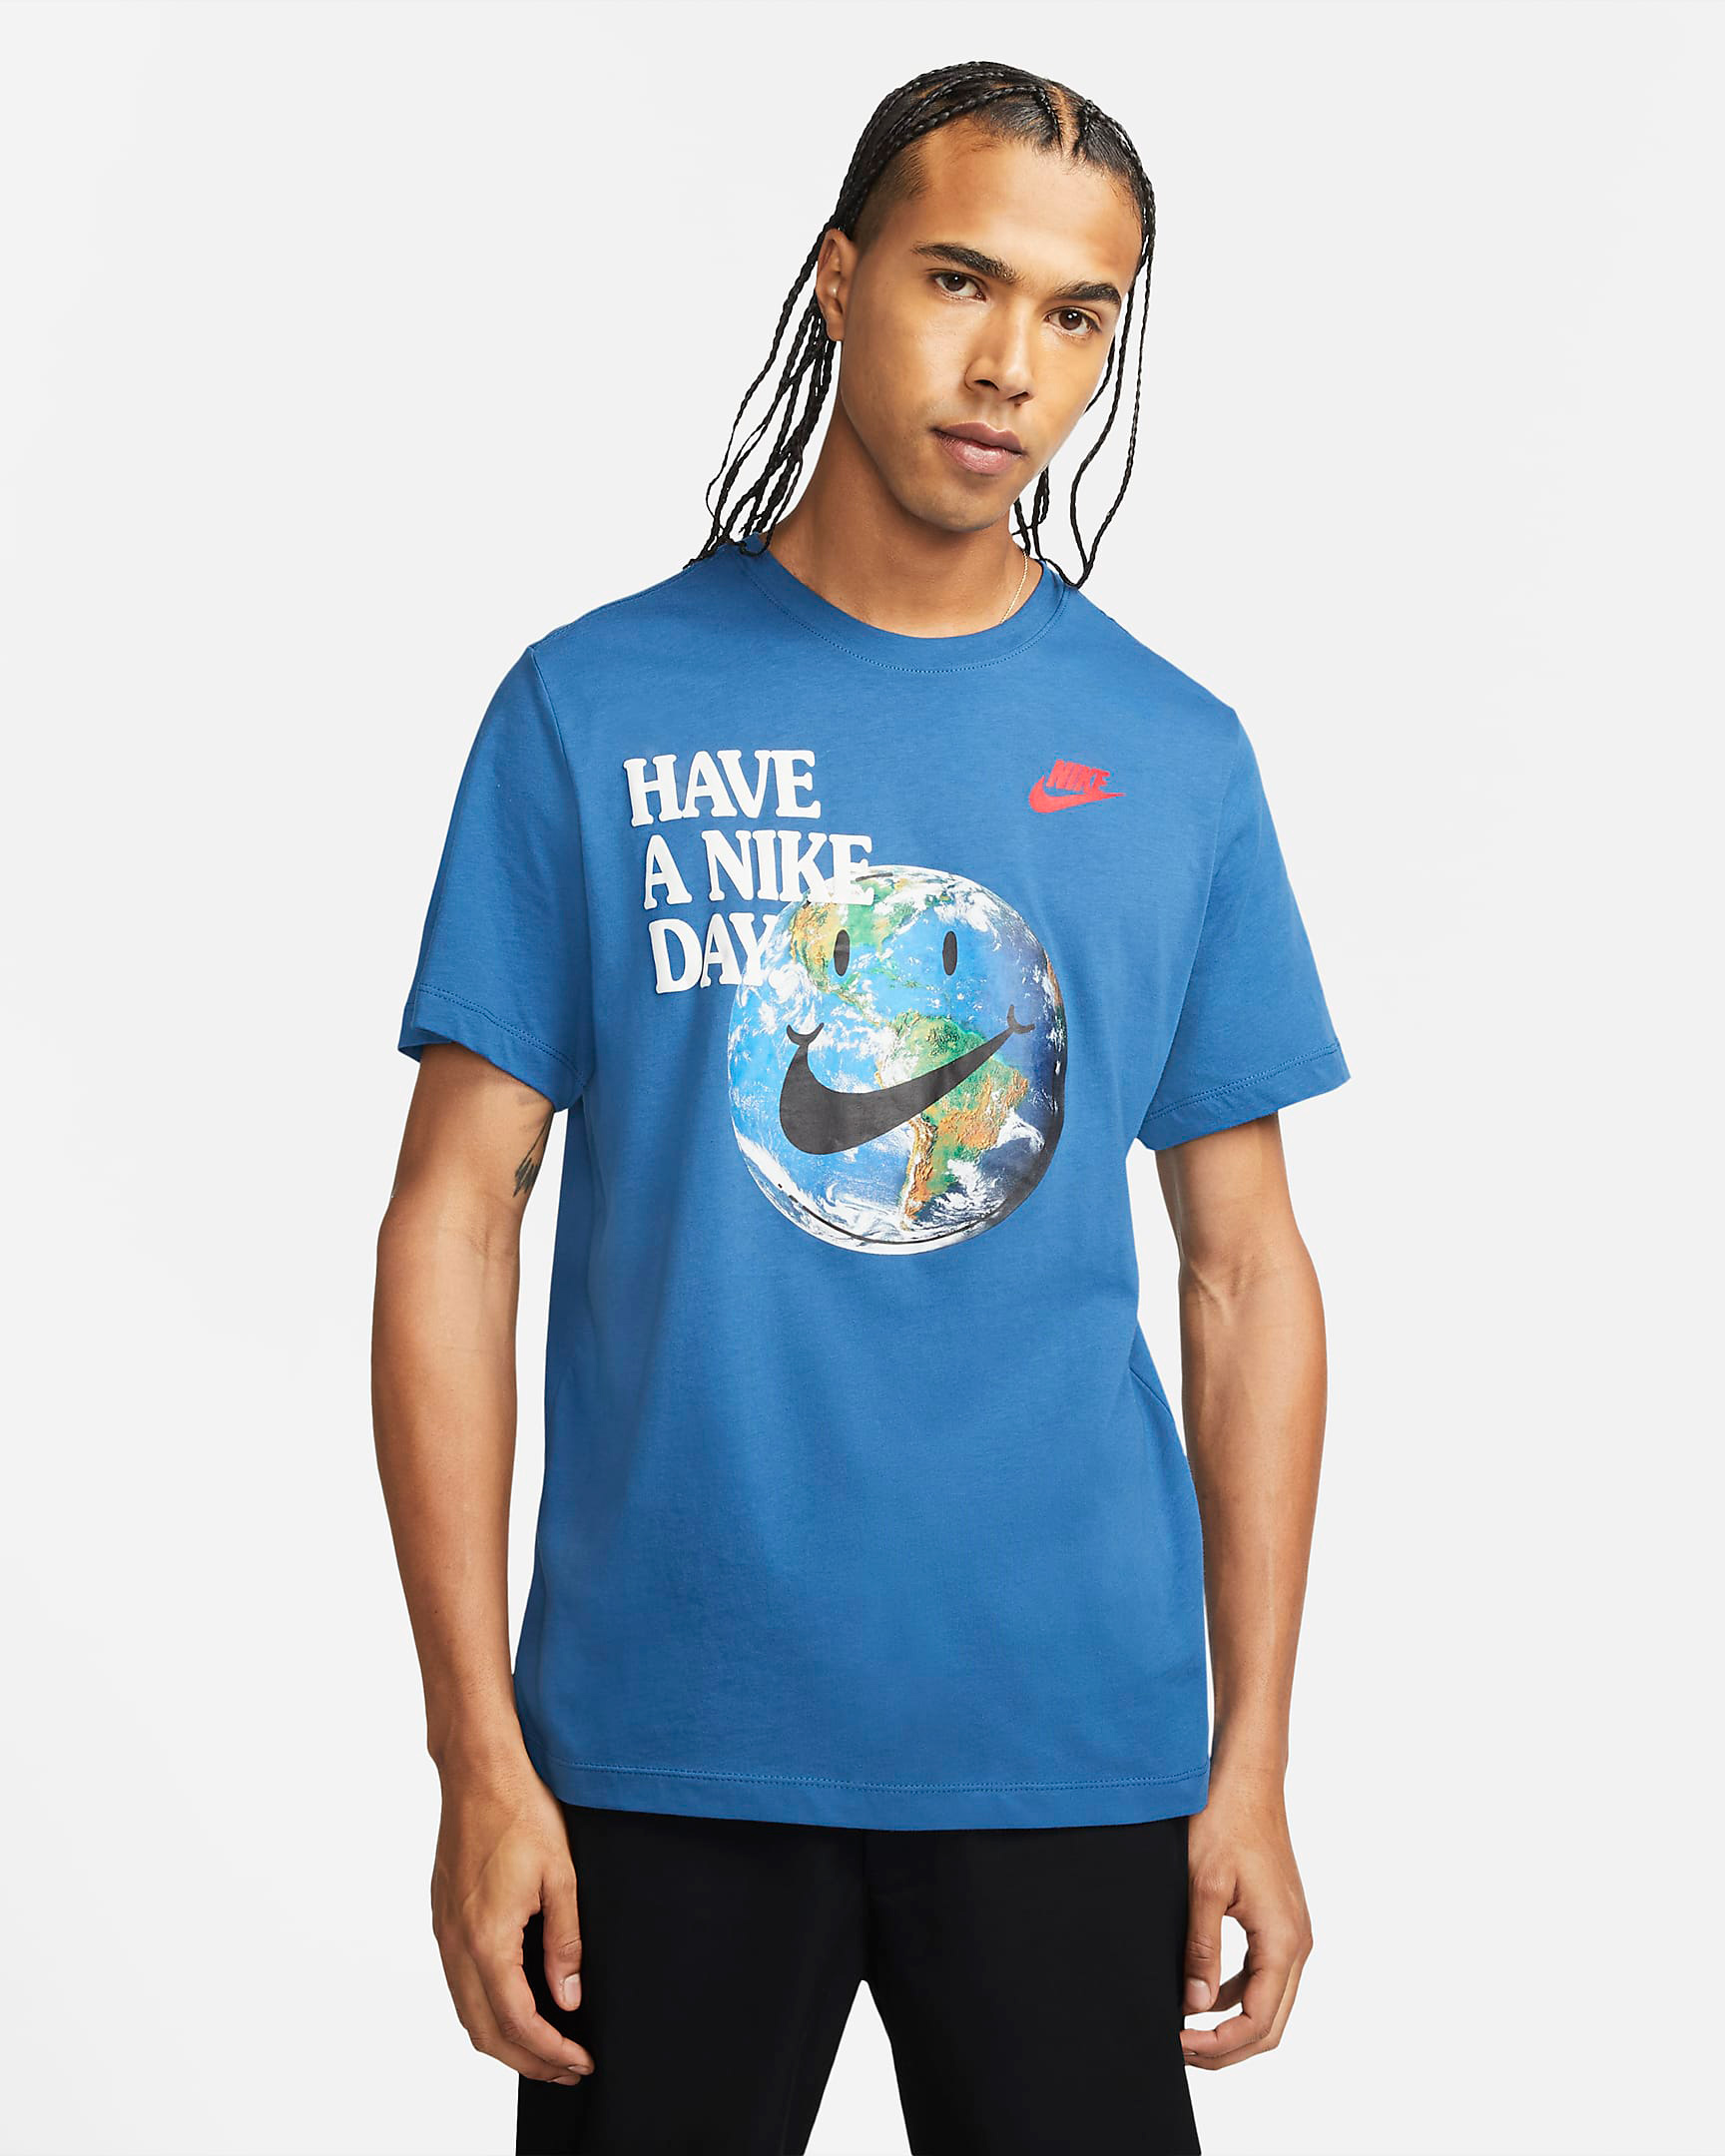 nike-dark-marina-blue-have-a-nike-day-t-shirt